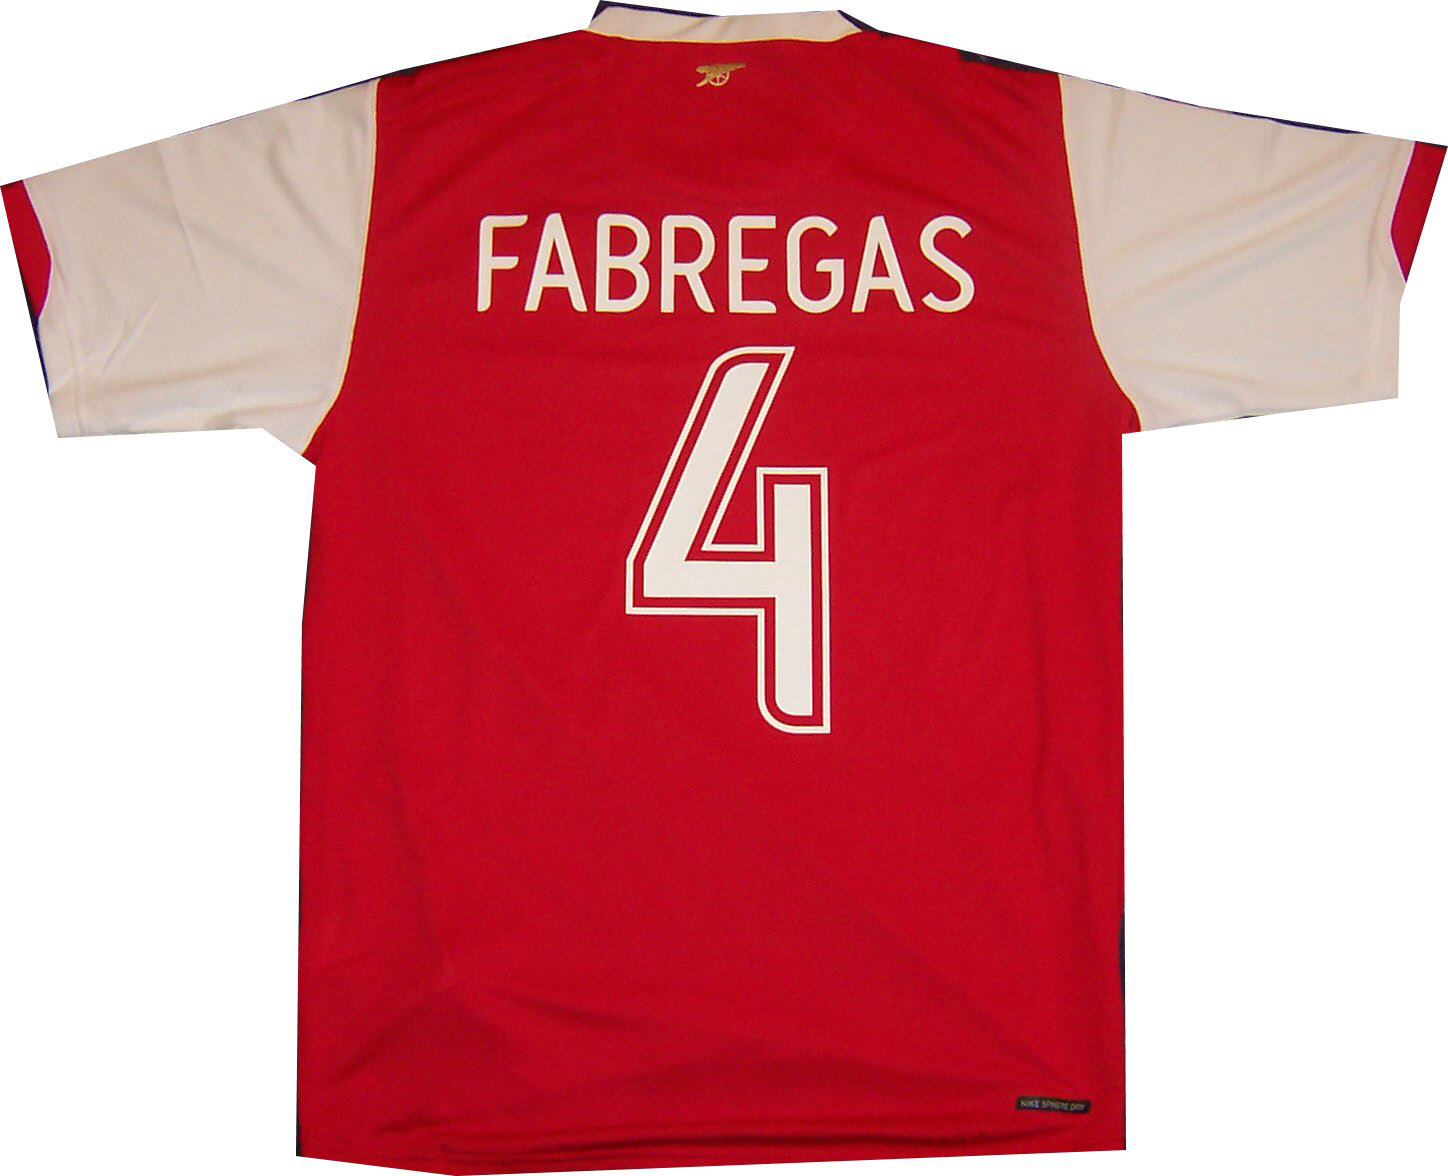 06 07 Arsenal home Fabregas 4 CL style